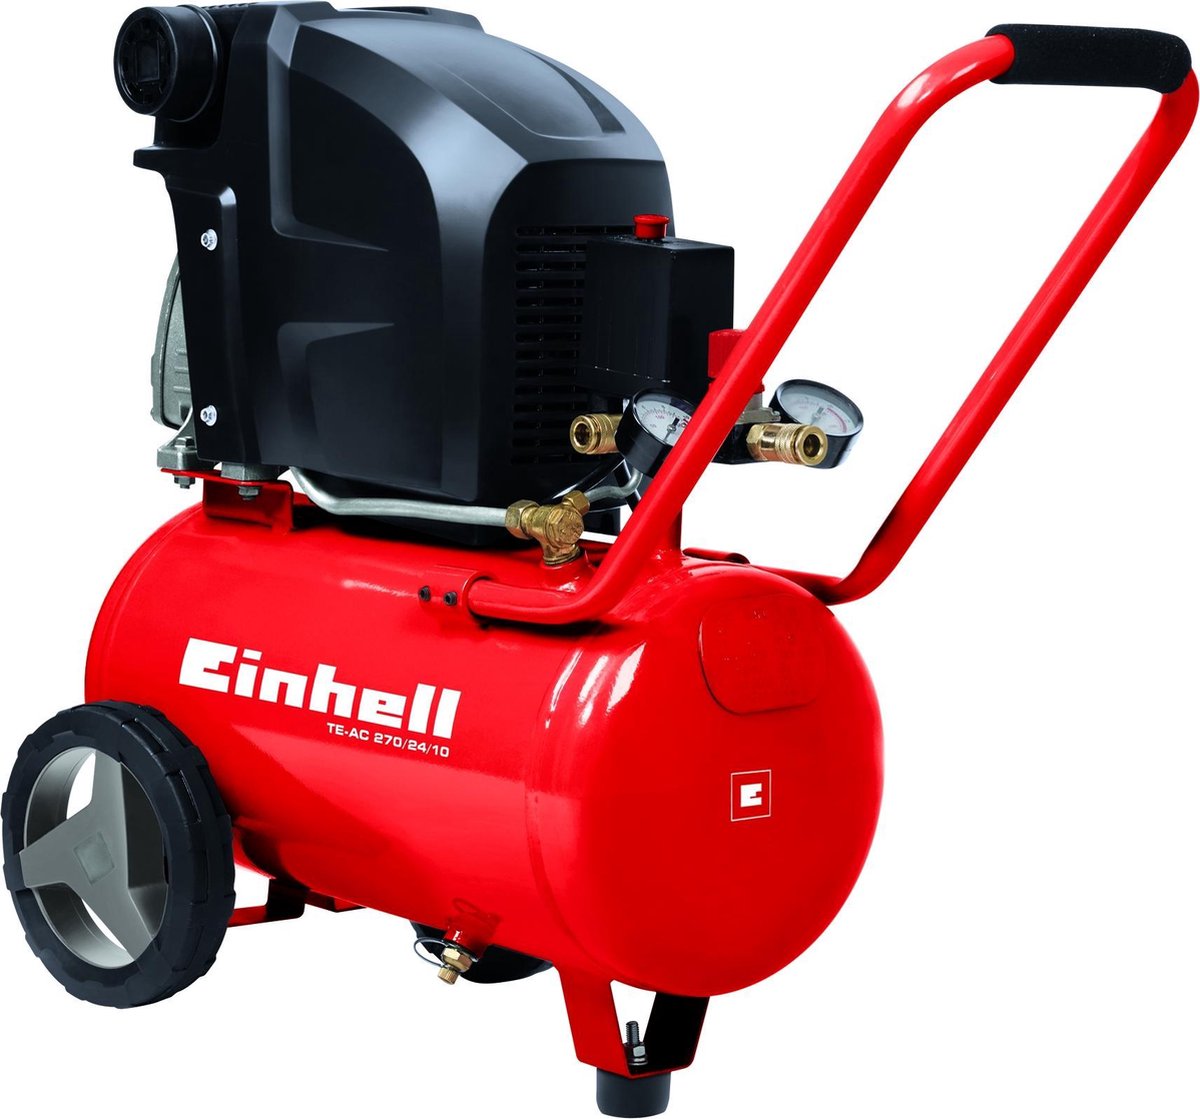 Einhell TE-AC 270/24/10 Compressor - 1800W - 10 bar - 24L - Rojo